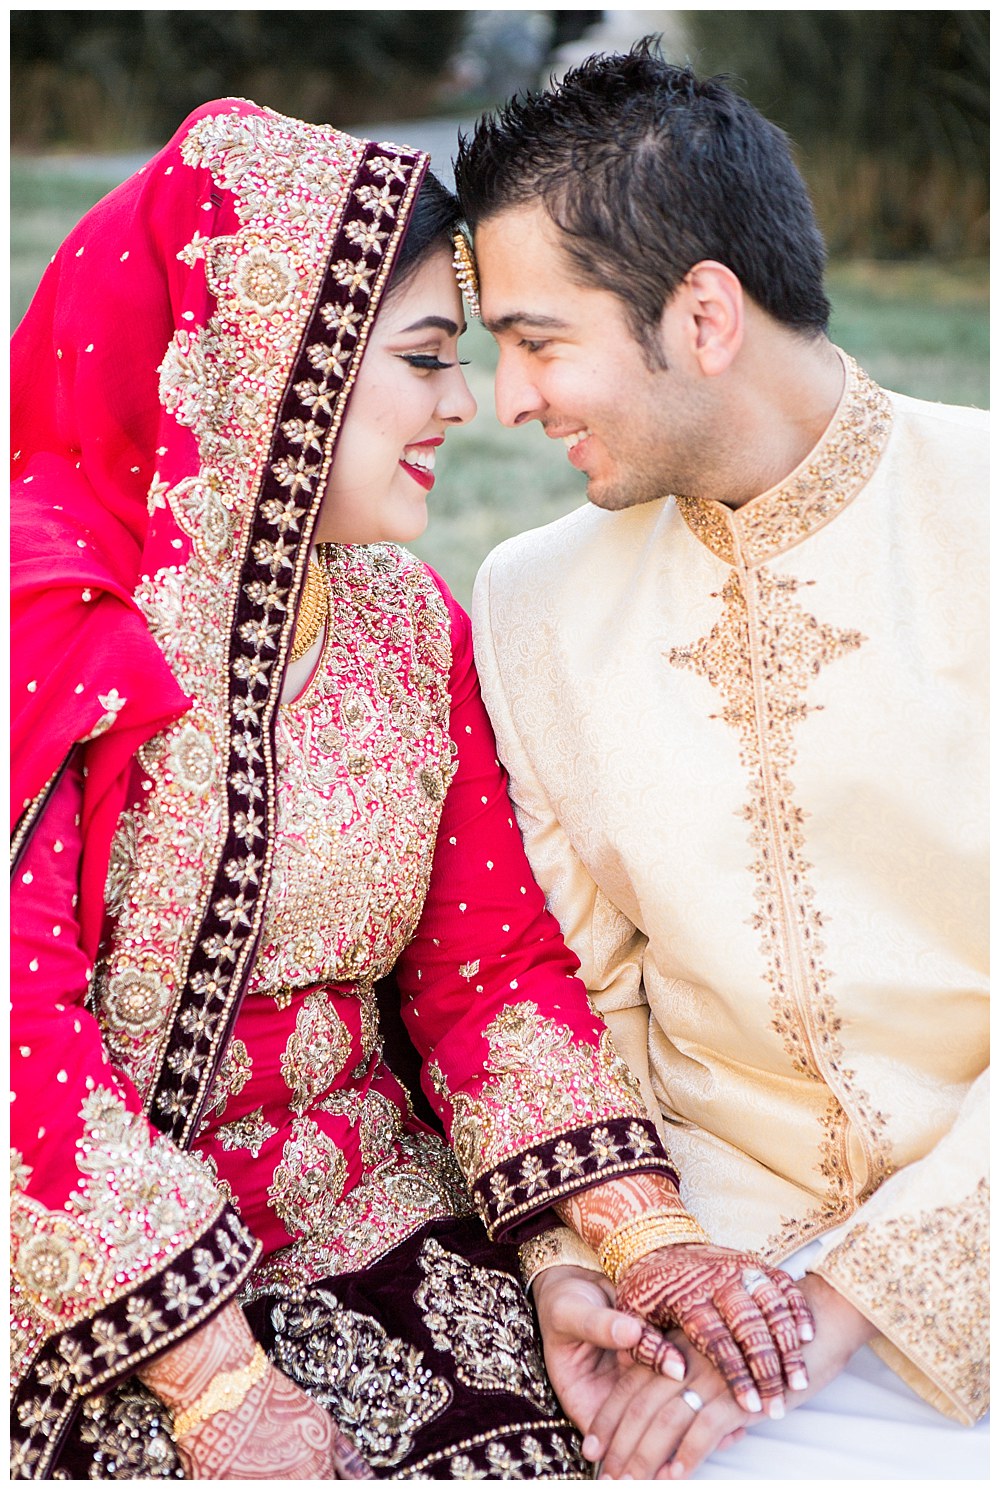 1,068 Pakistan Wedding Couple Images, Stock Photos, 3D objects, & Vectors |  Shutterstock